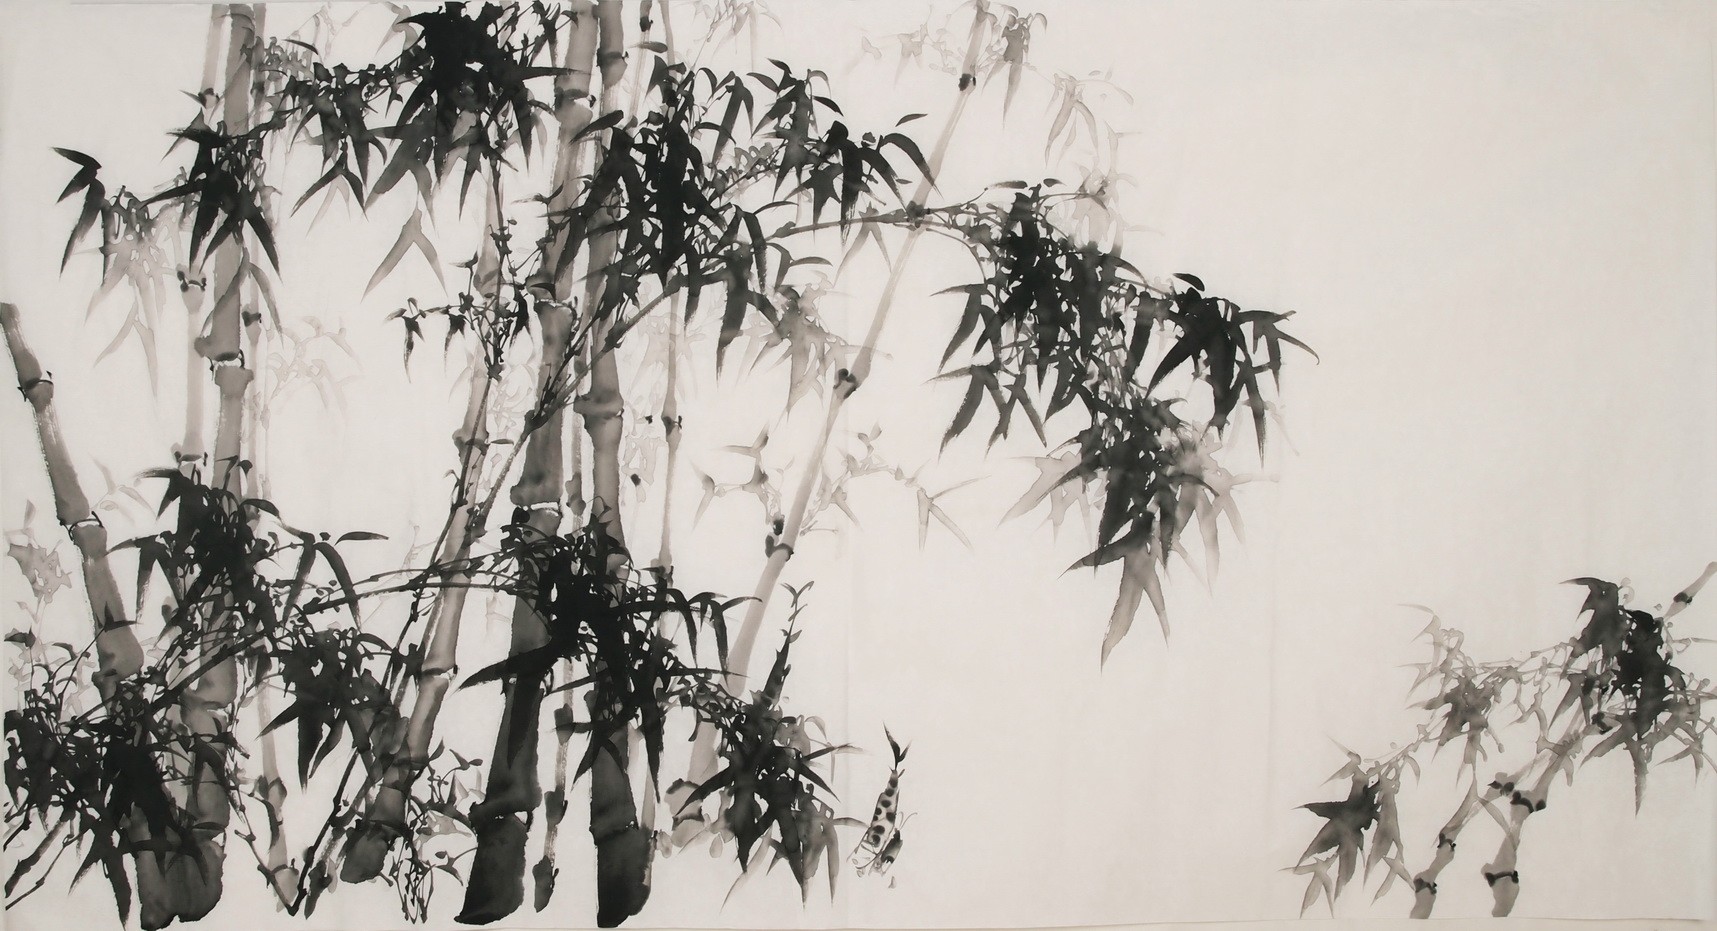 Ink Bamboo - CNAG003972